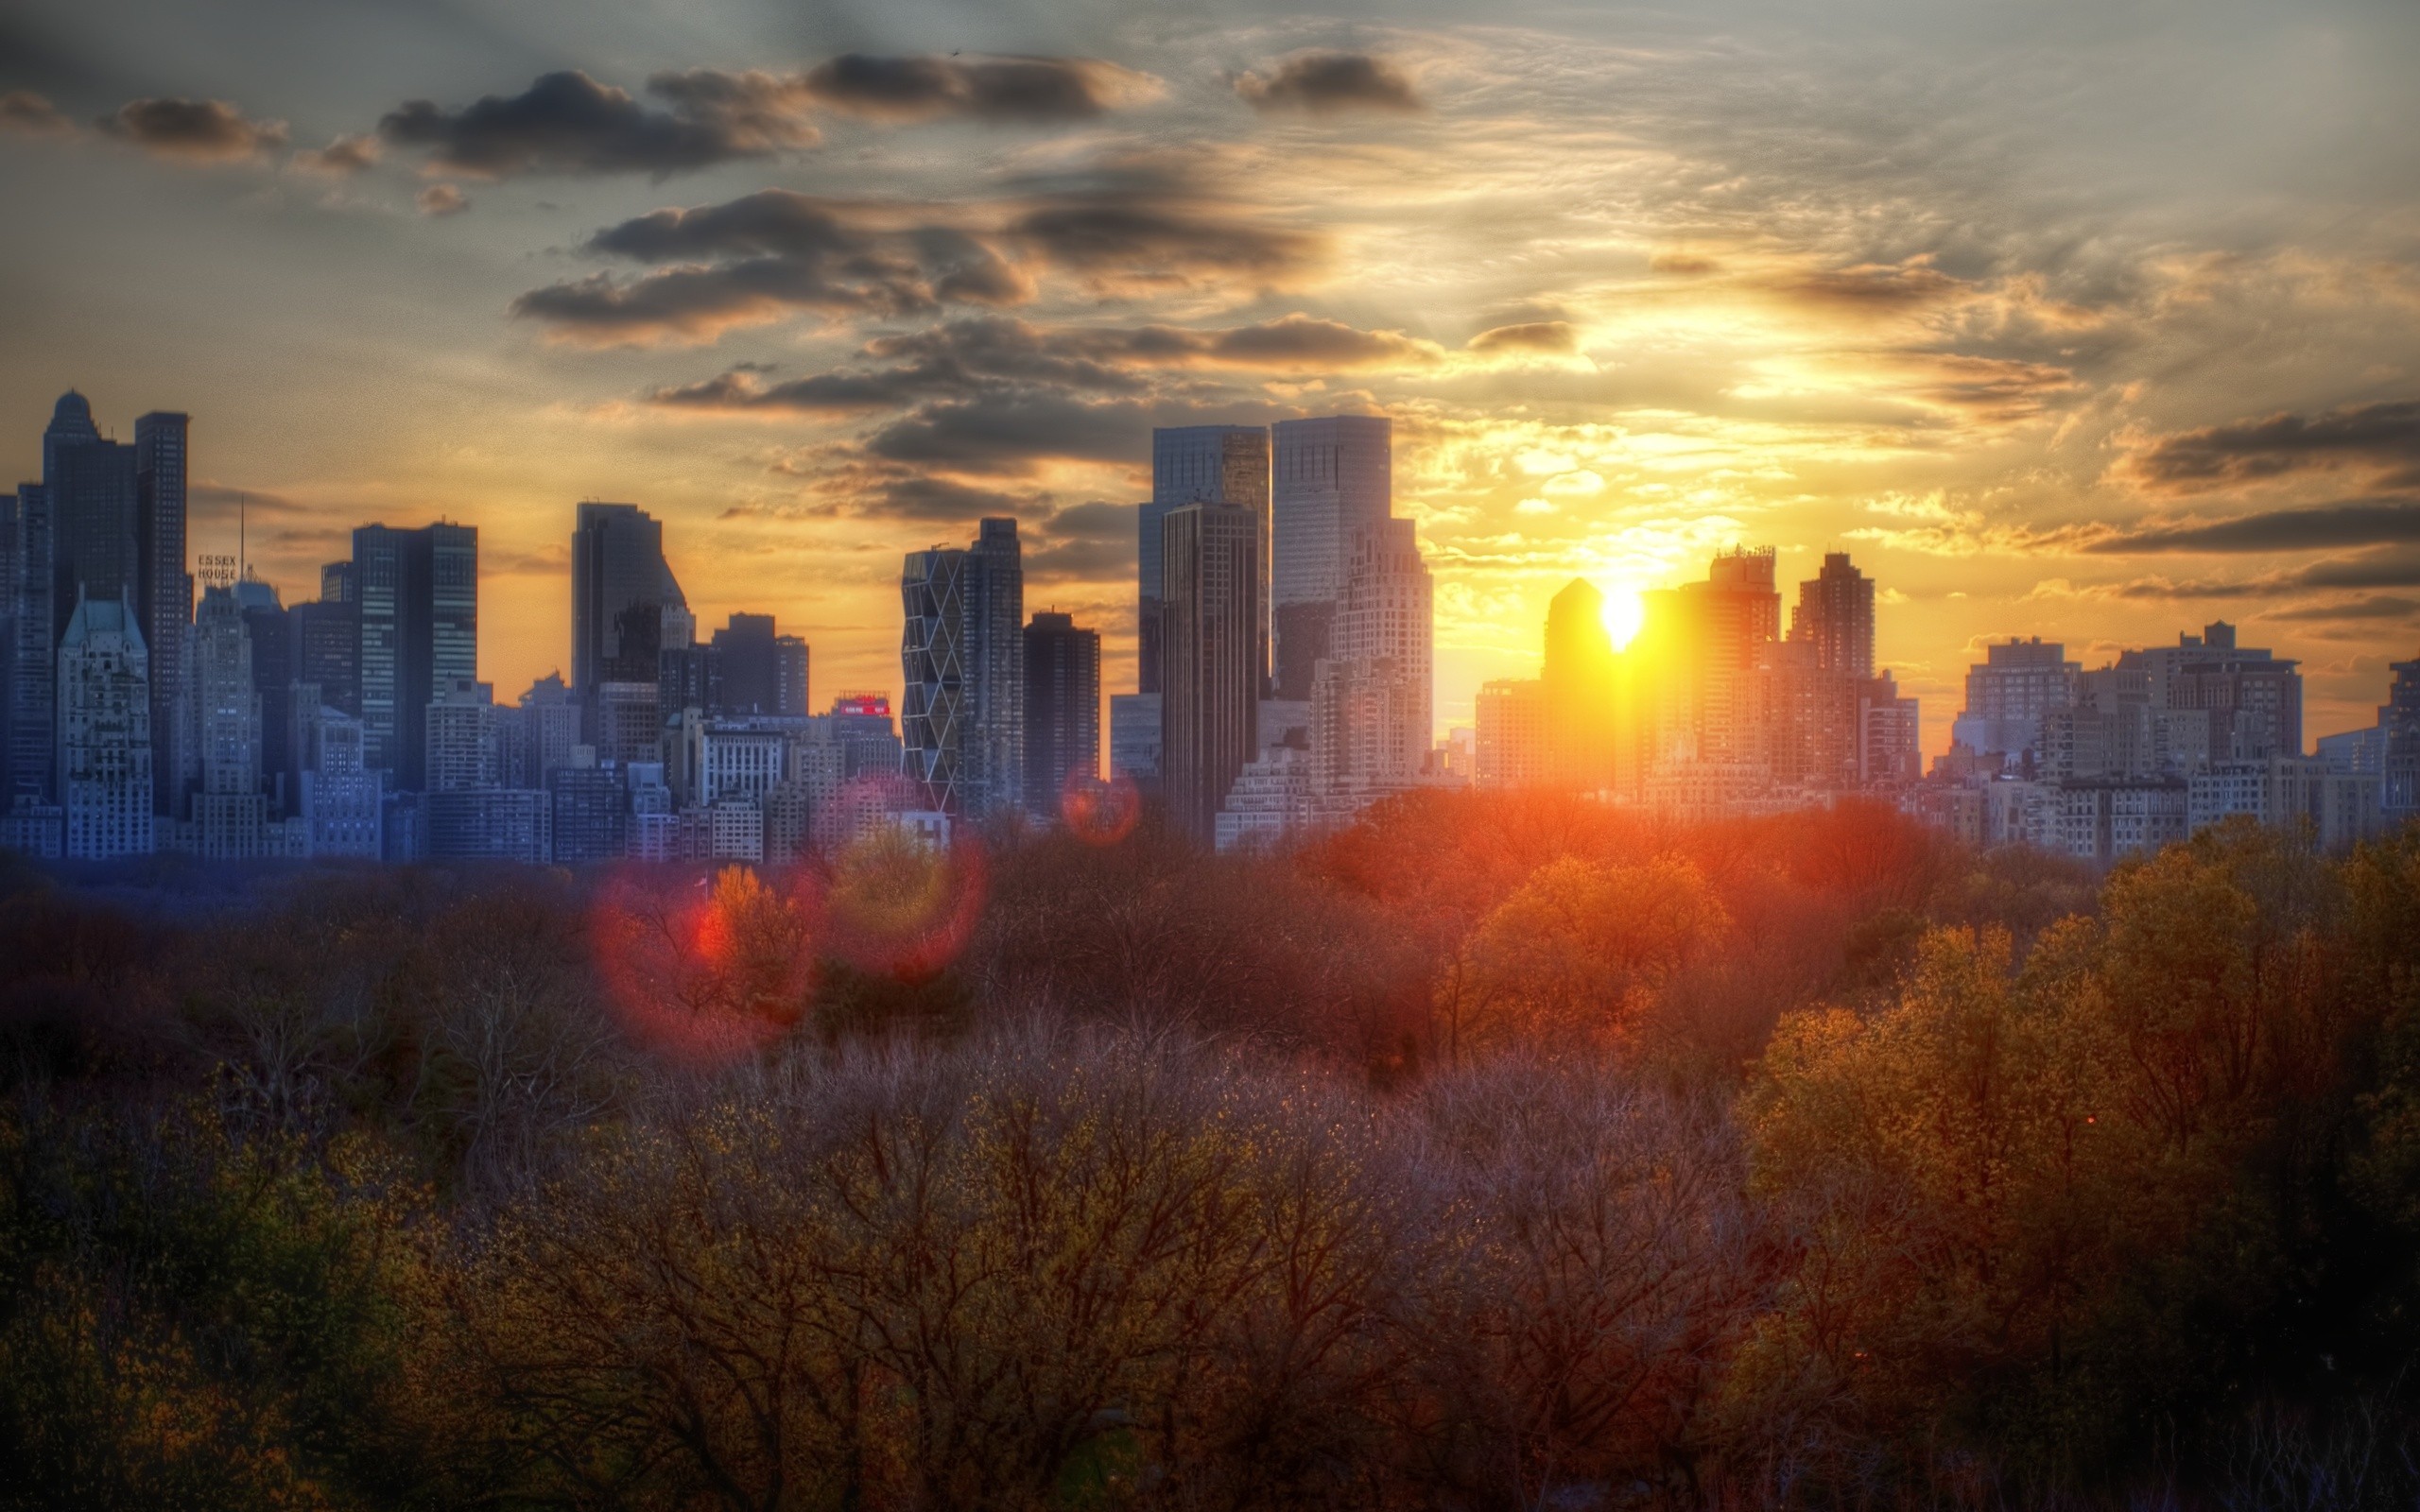 General 2560x1600 Central Park city park sunset New York City USA cityscape sunlight Sun sky clouds